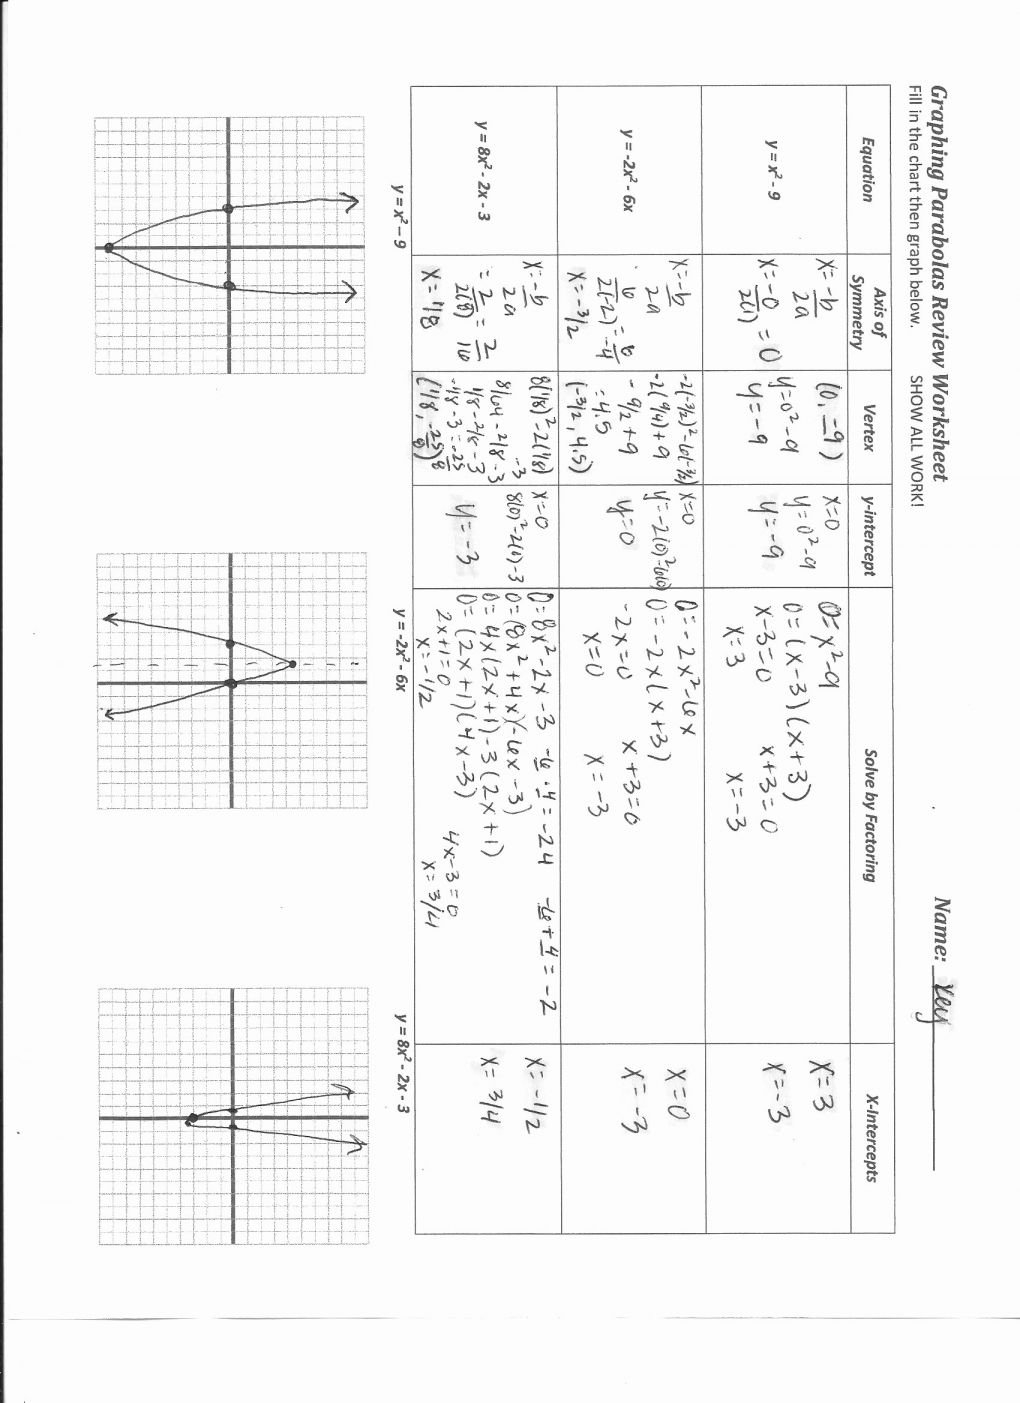 Graphing Parabolas Worksheet Algebra 1  Briefencounters Also Graphing Parabolas Worksheet Algebra 1